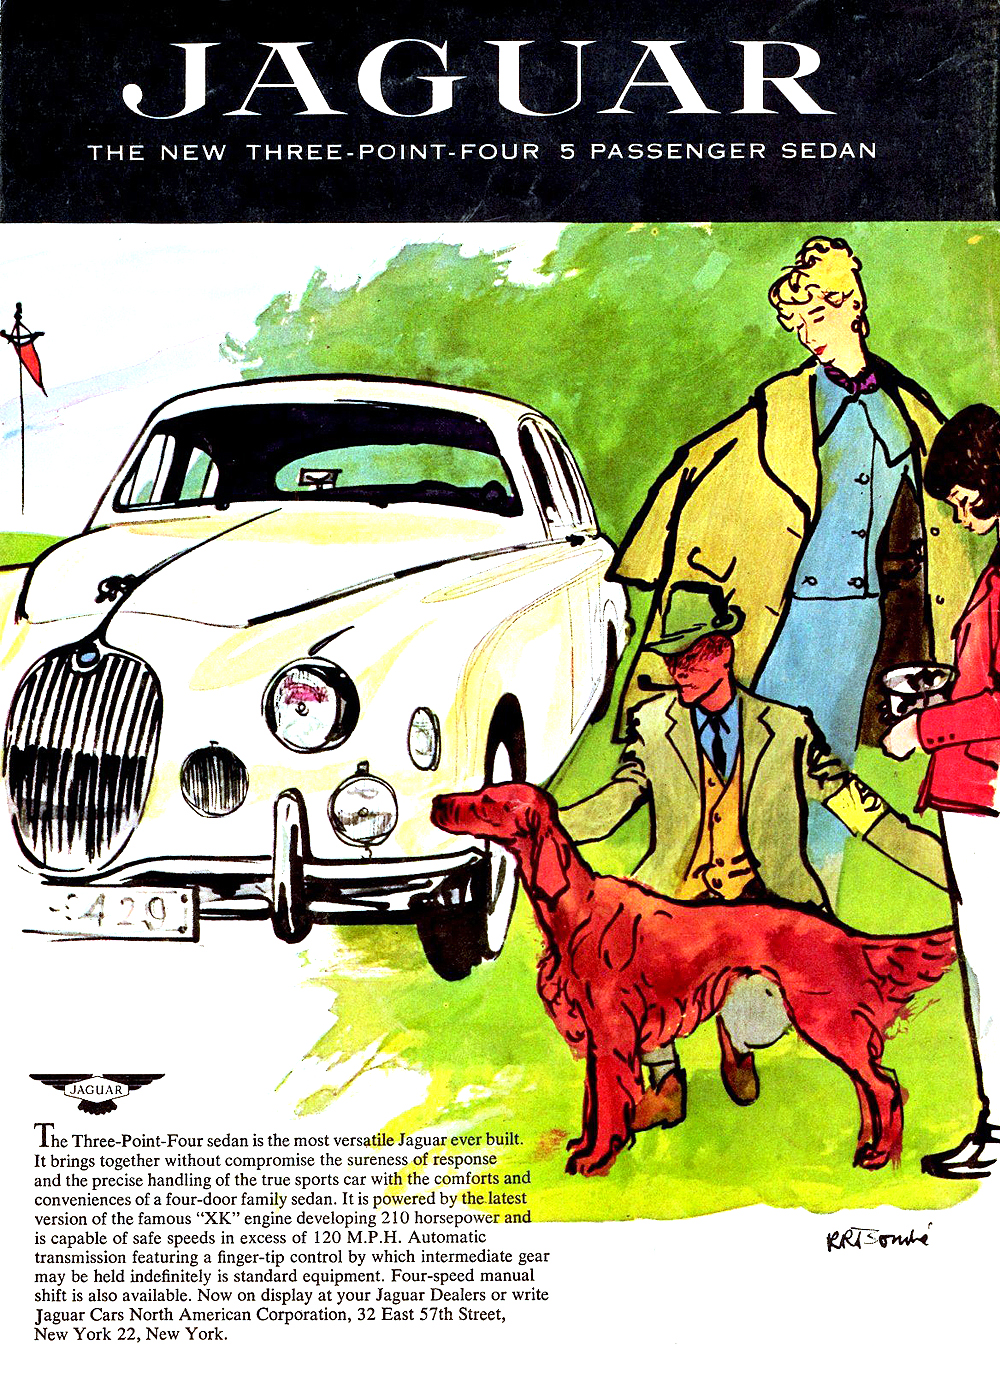 Jaguar 3.4 5 Passenger Sedan Ad (July, 1957): Illustrated by René Bouché